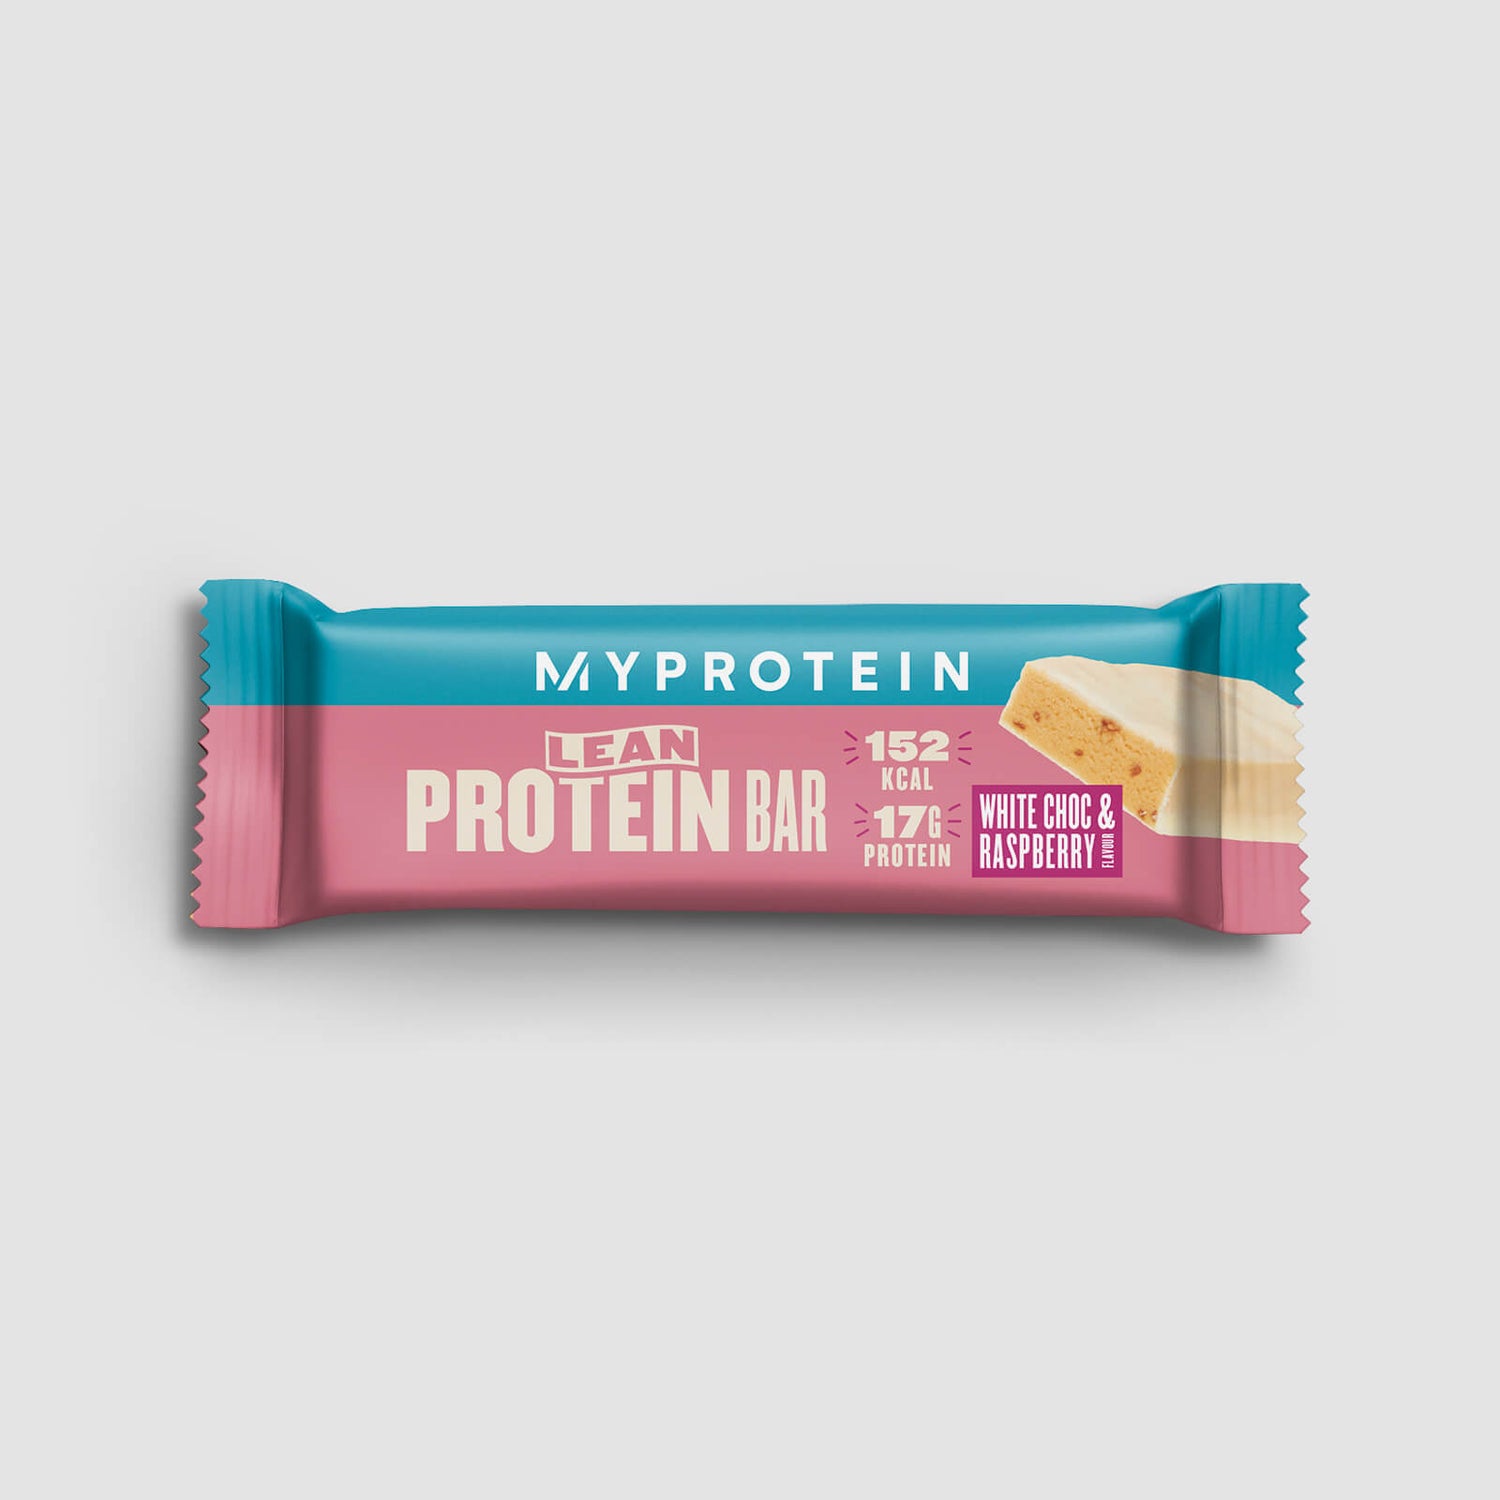 Liesas baltyminis batonėlis „Lean Protein Bar“ (mėginys)